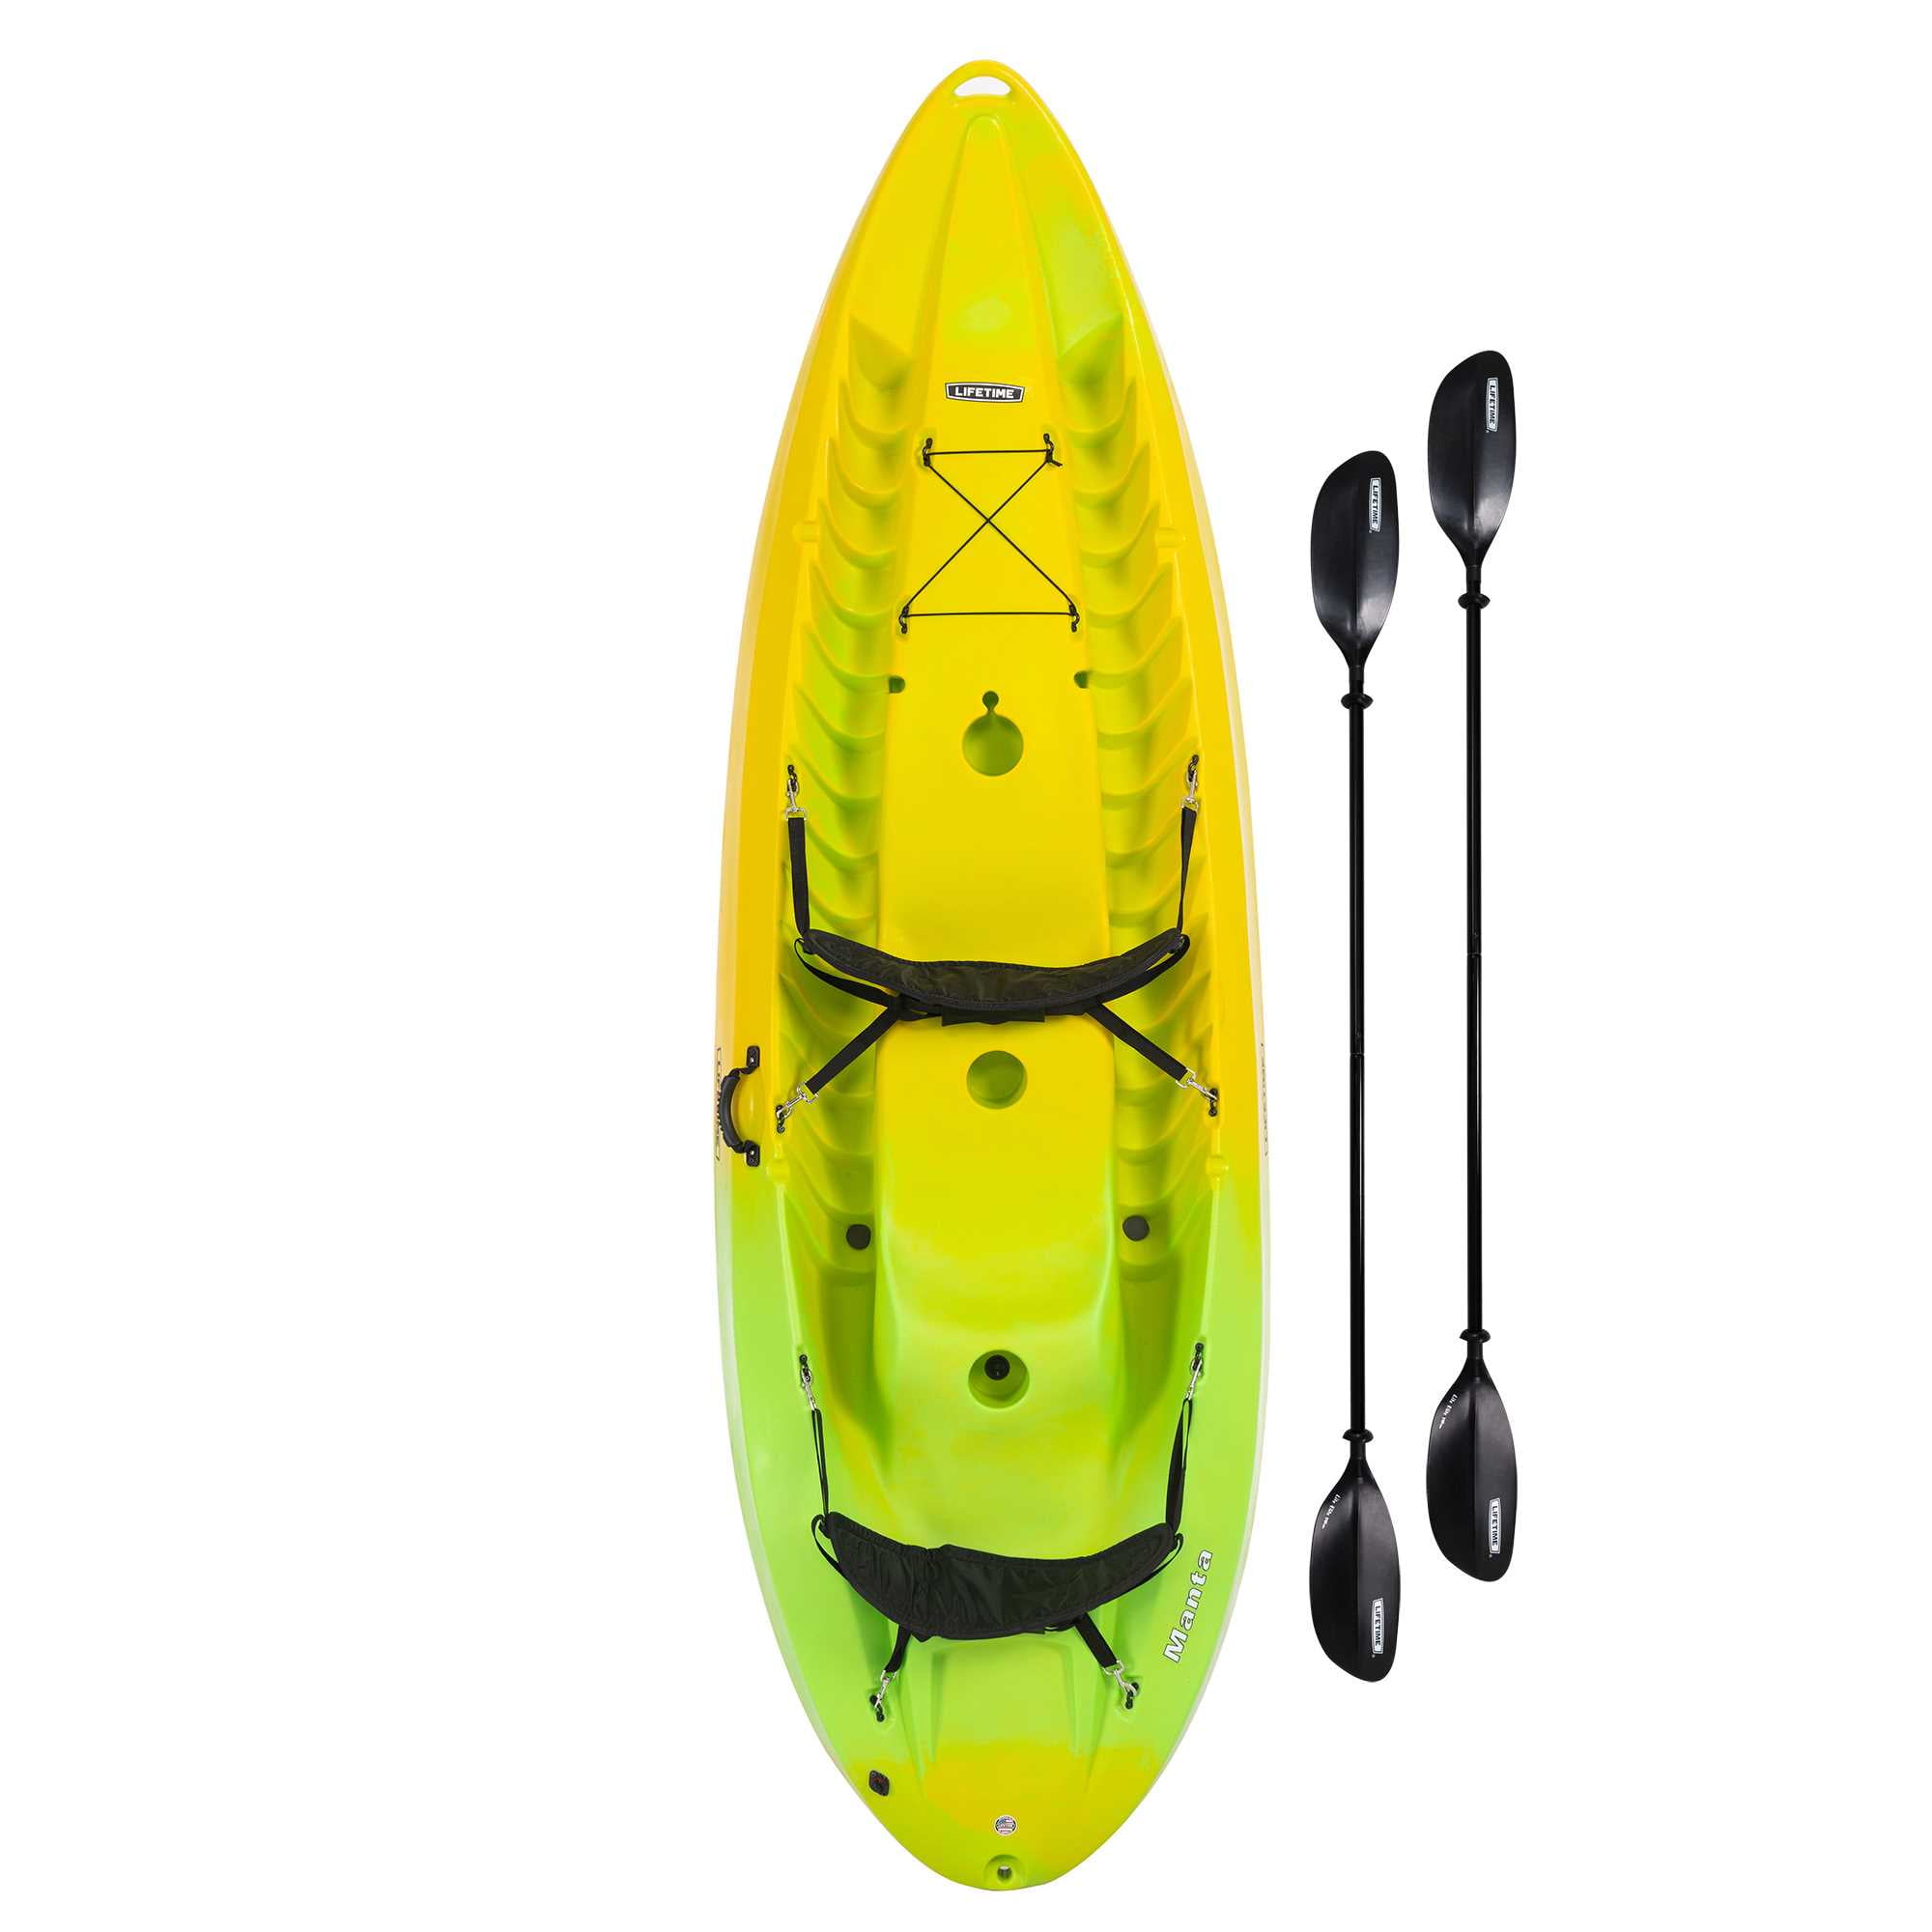 Lego 5 New Yellow Minifigure Kayak Utensil Oar Paddle Head Canoe Pieces 